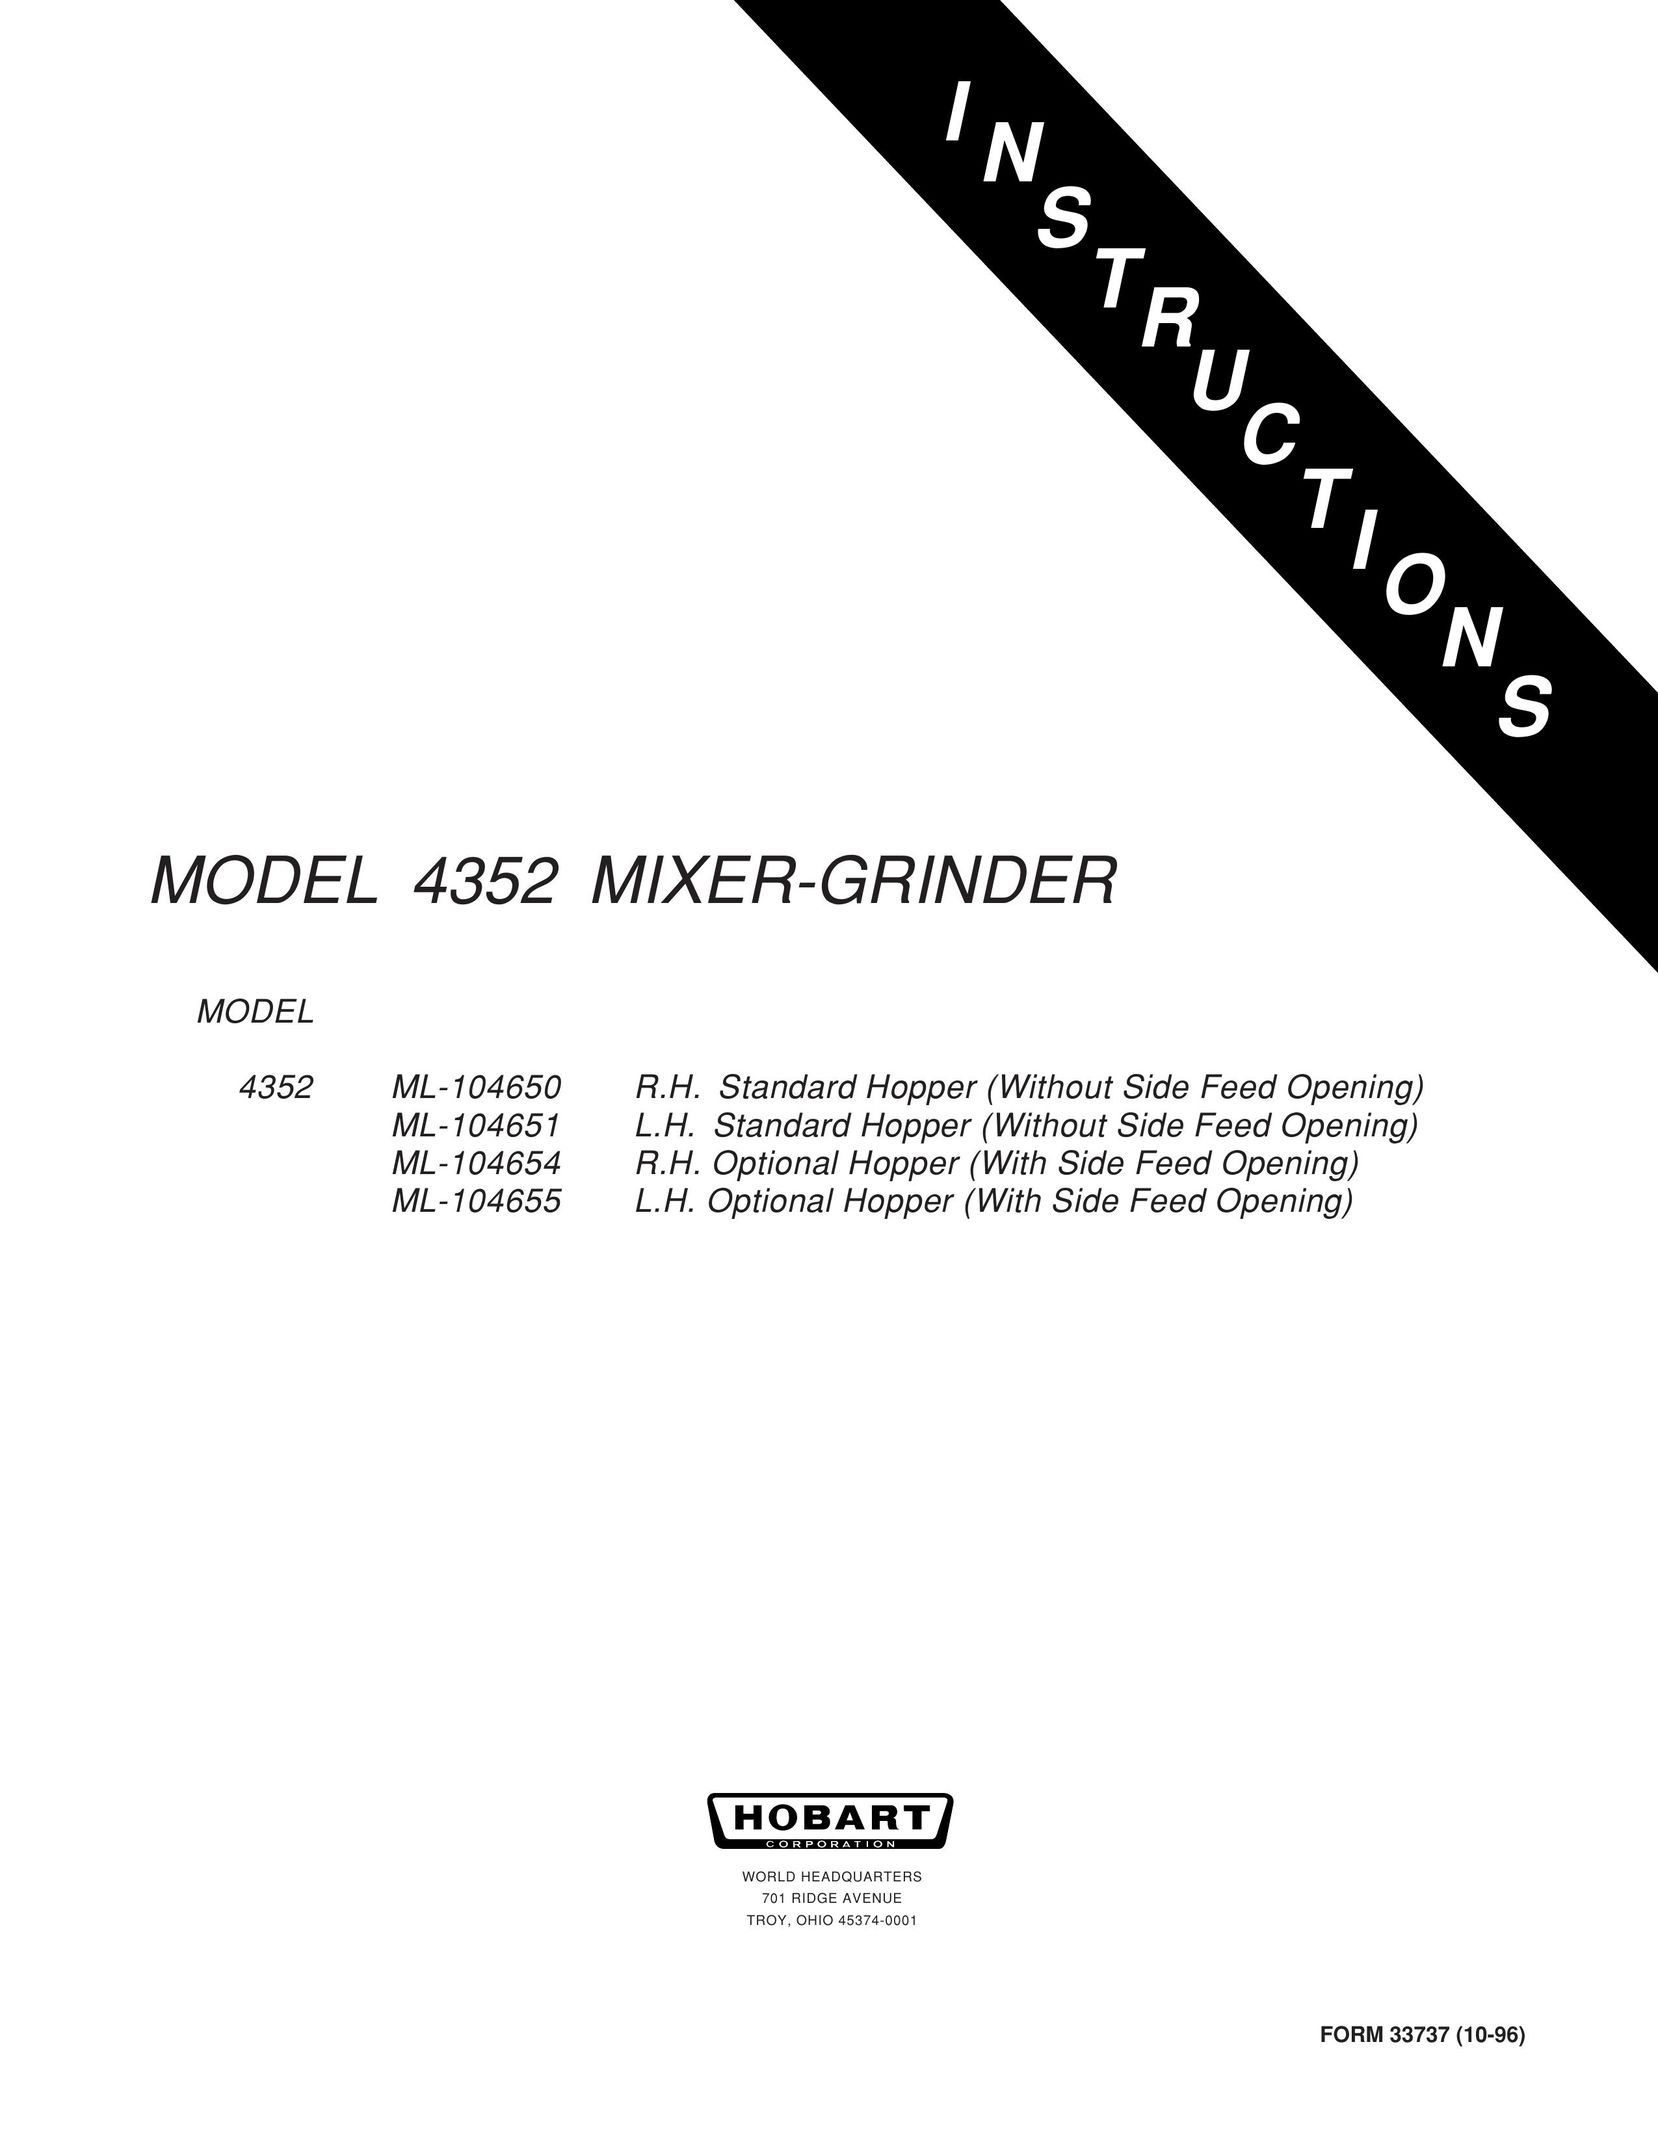 Hobart ML-104651 Mixer User Manual